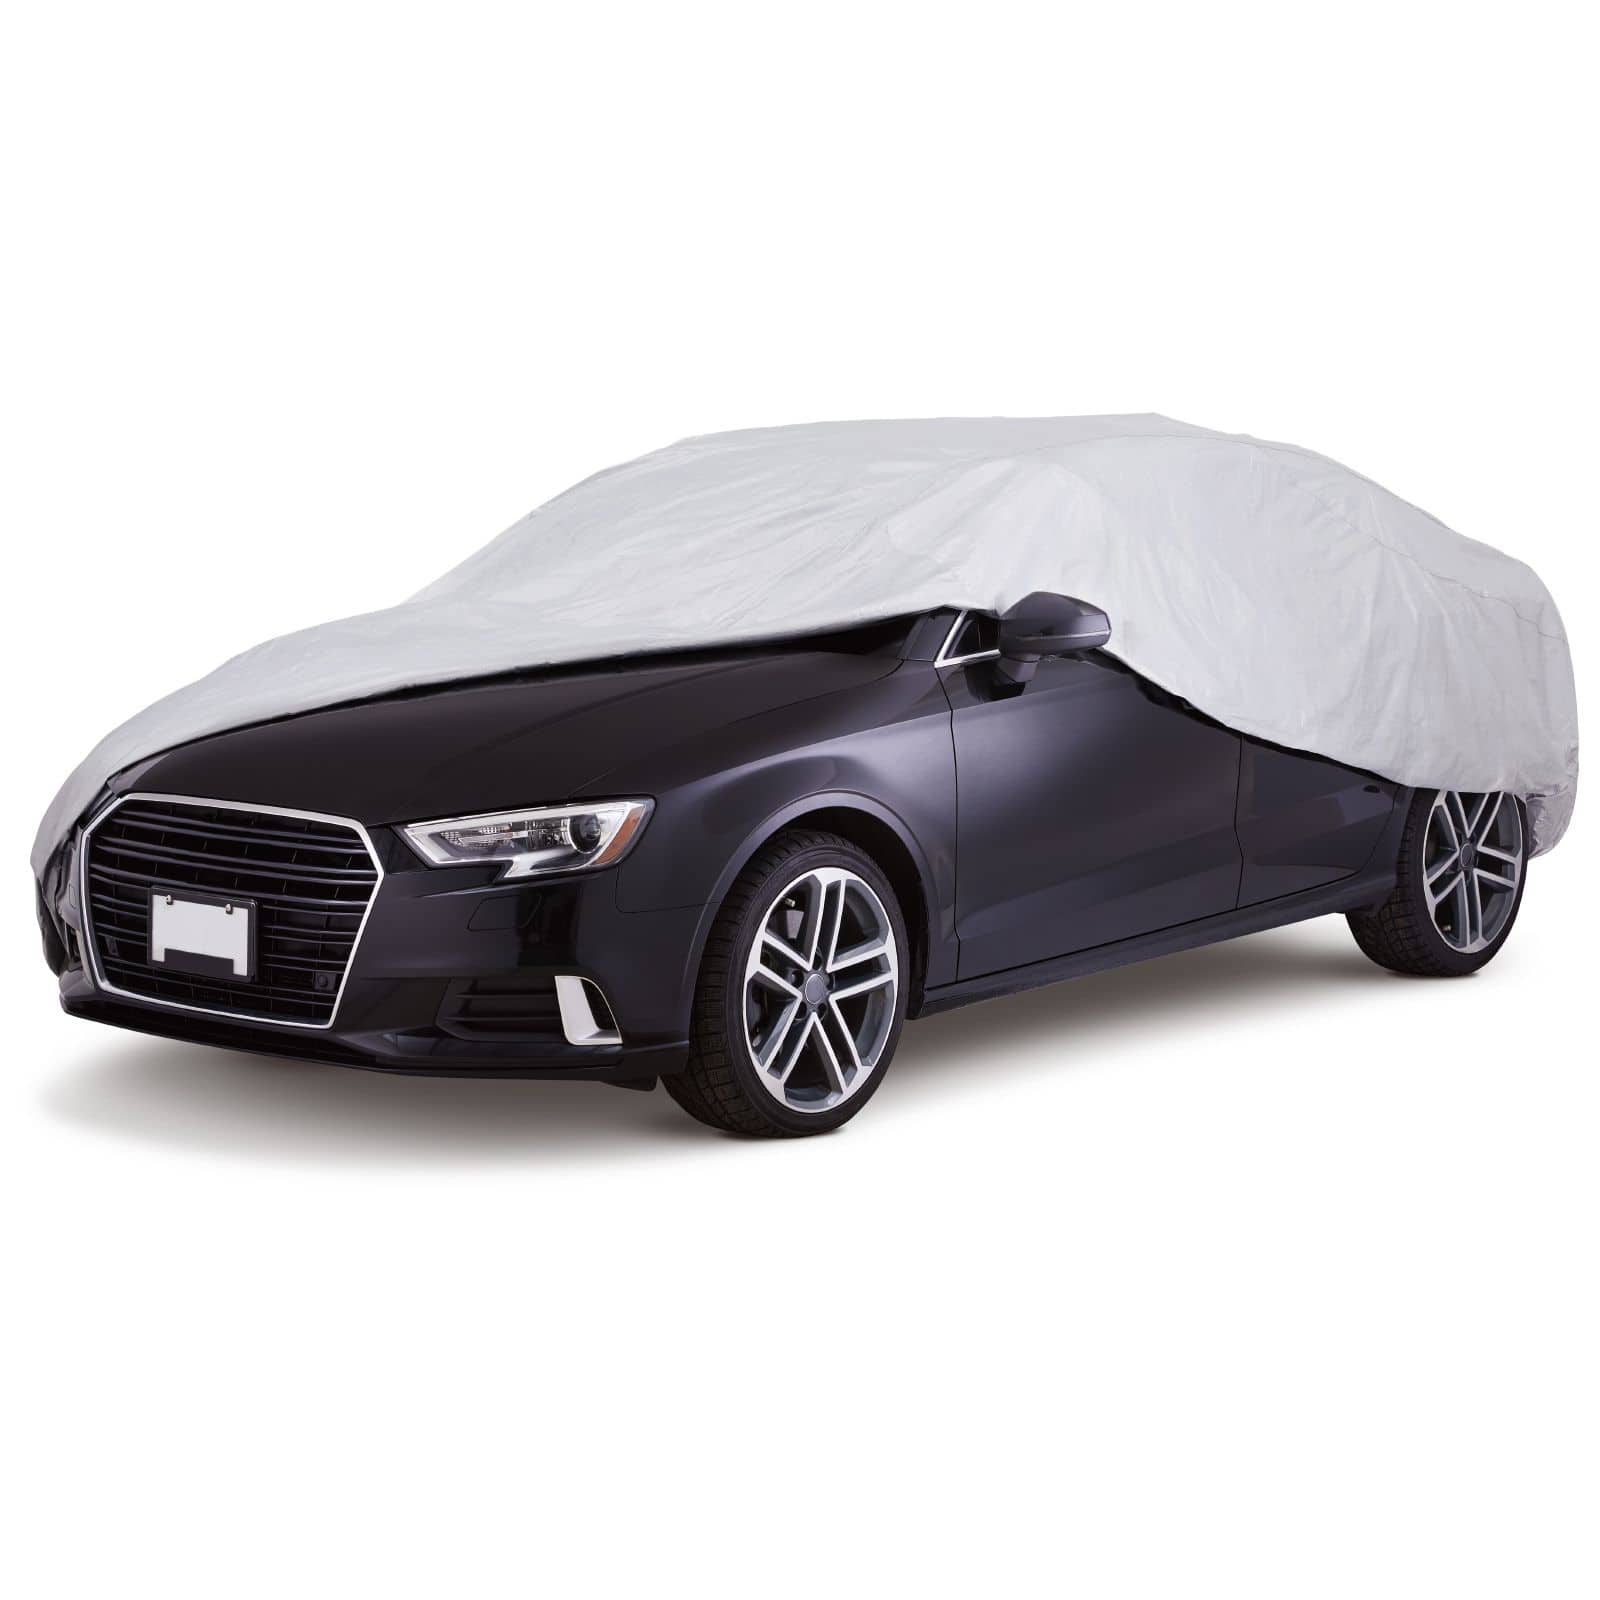 Simoniz Solar Shield Water Resistant Car Cover with UV Protection